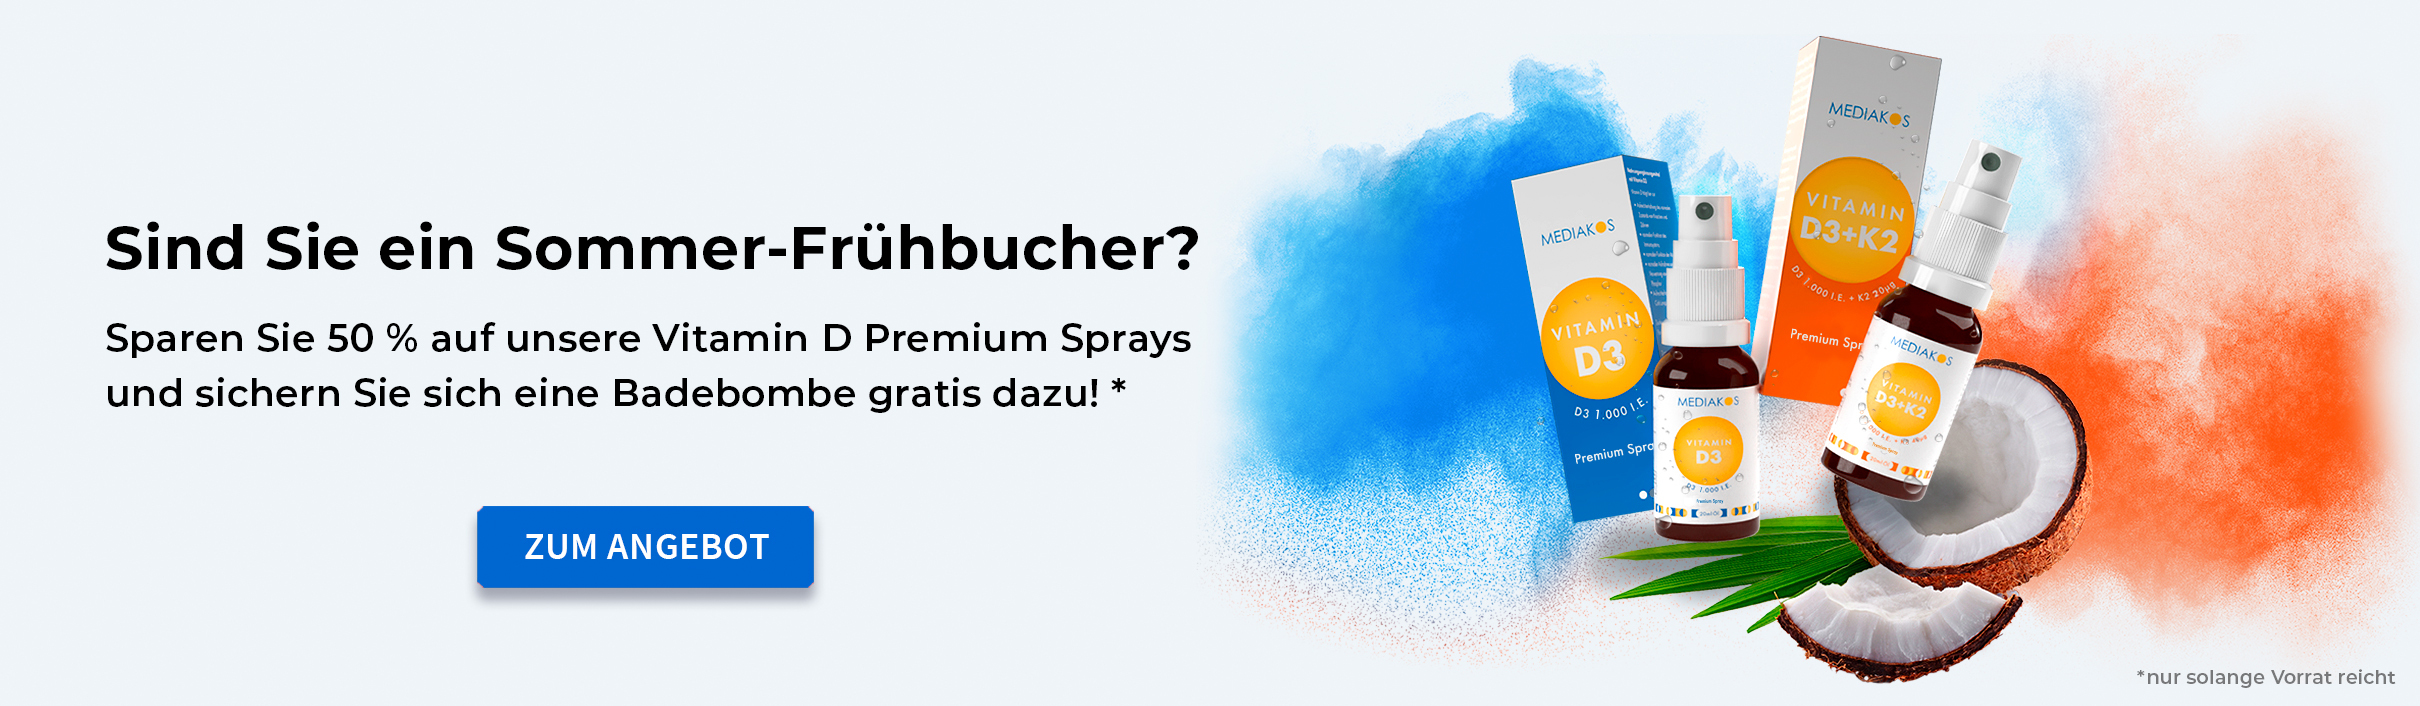 Premium Spray Aktion gratis Badebombe